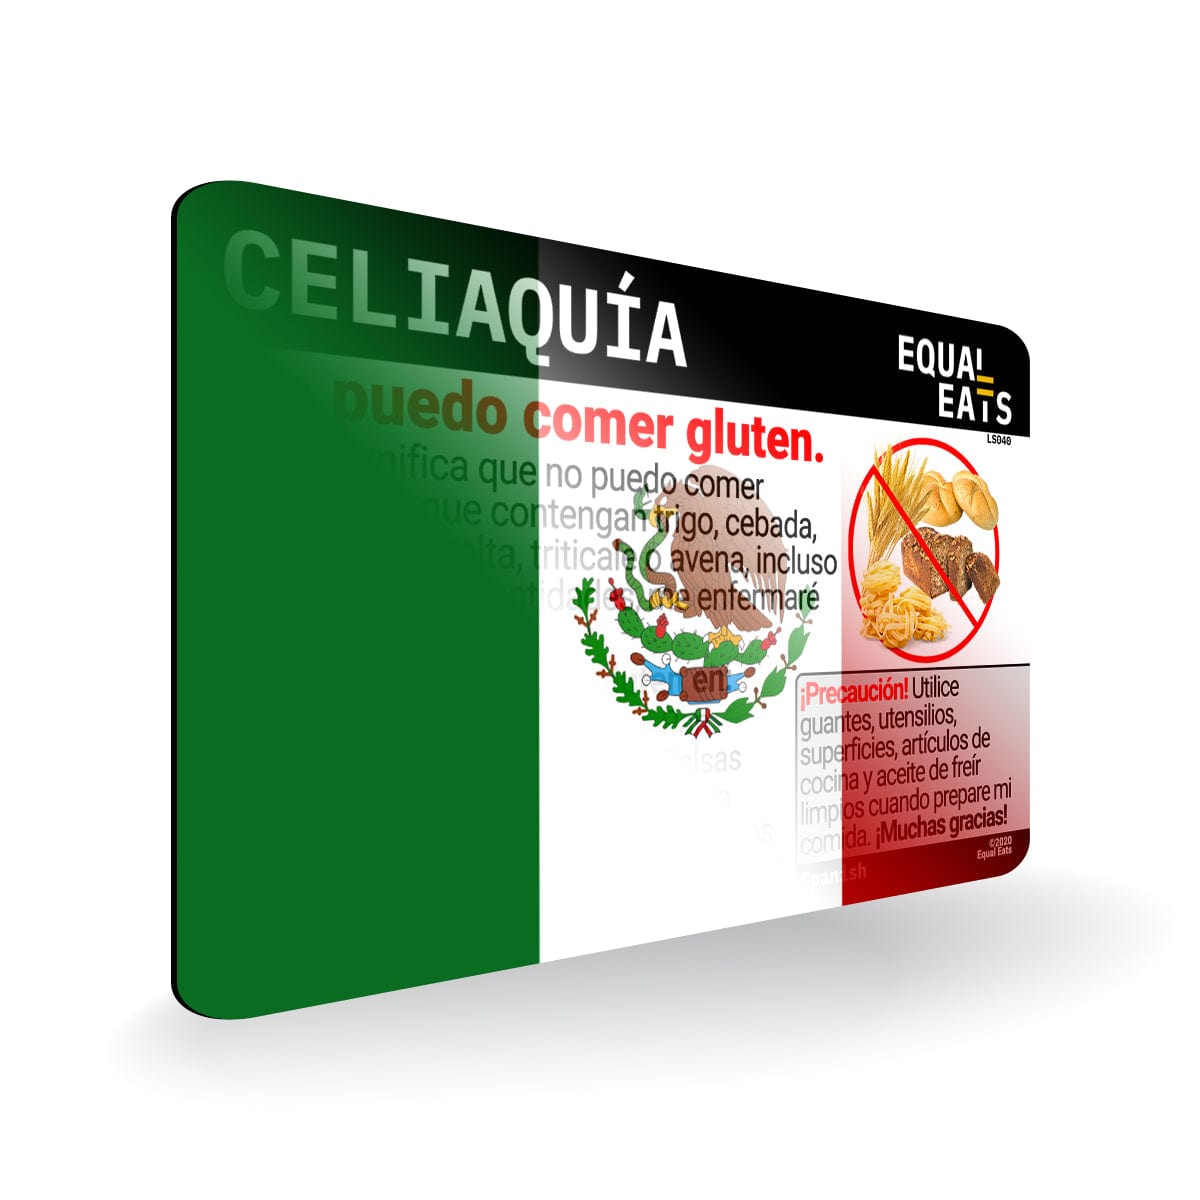 Spanish Celiac Disease Card - Gluten Free Travel in Mexico and Latin America